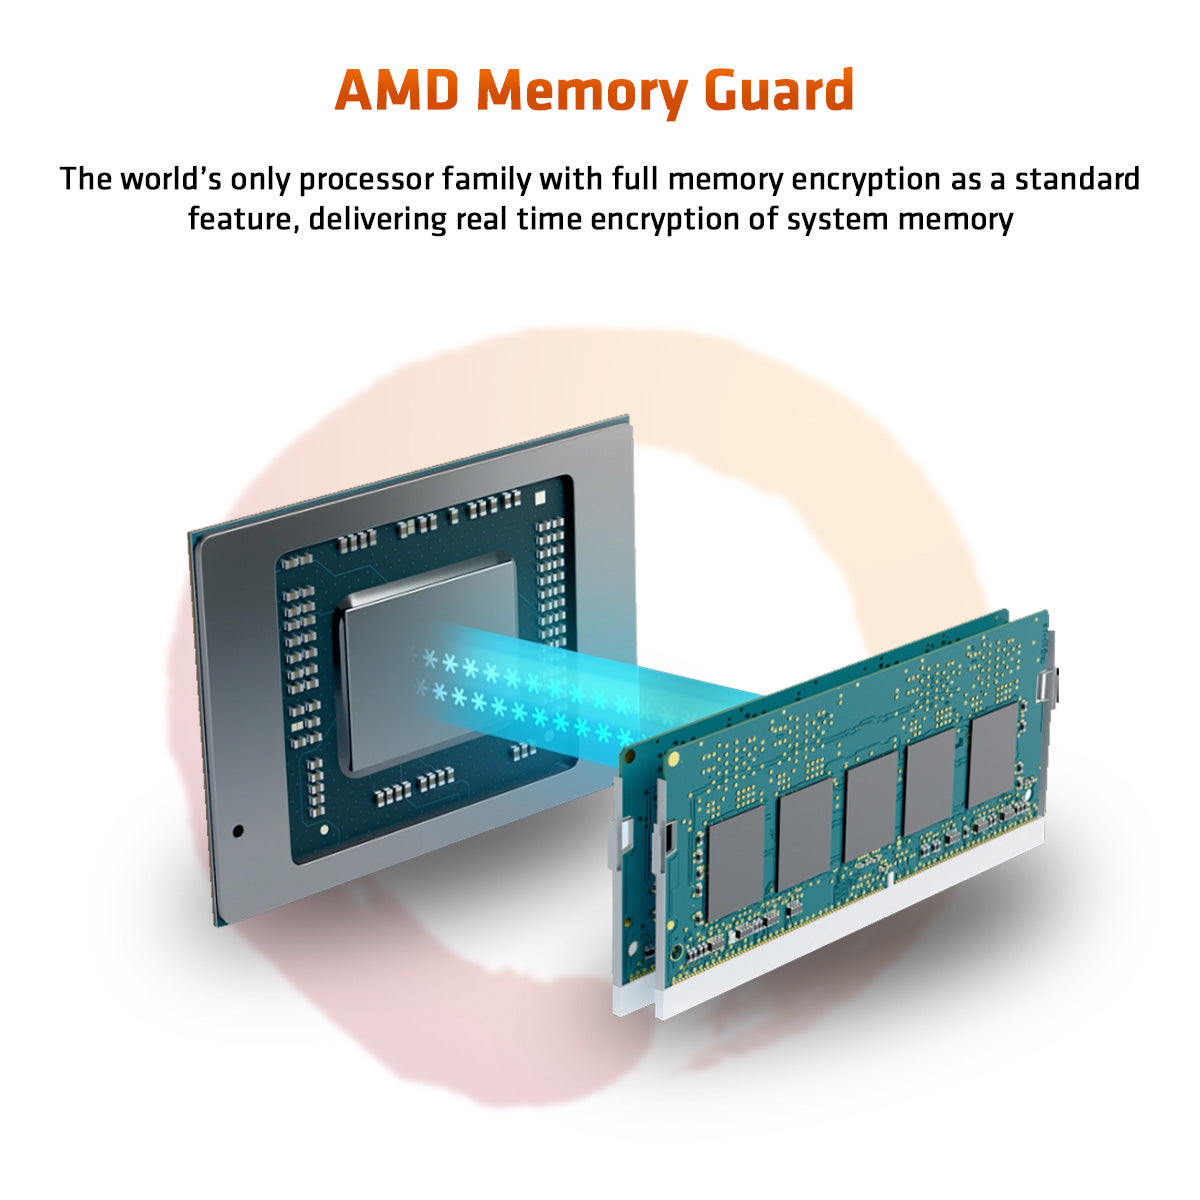 AMD Ryzen थ्रेडिपर PRO 3955WX वर्कस्टेशन प्रोसेसर 16 कोर 4.3GHz तक 73MB कैश sWRX8 सॉकेट